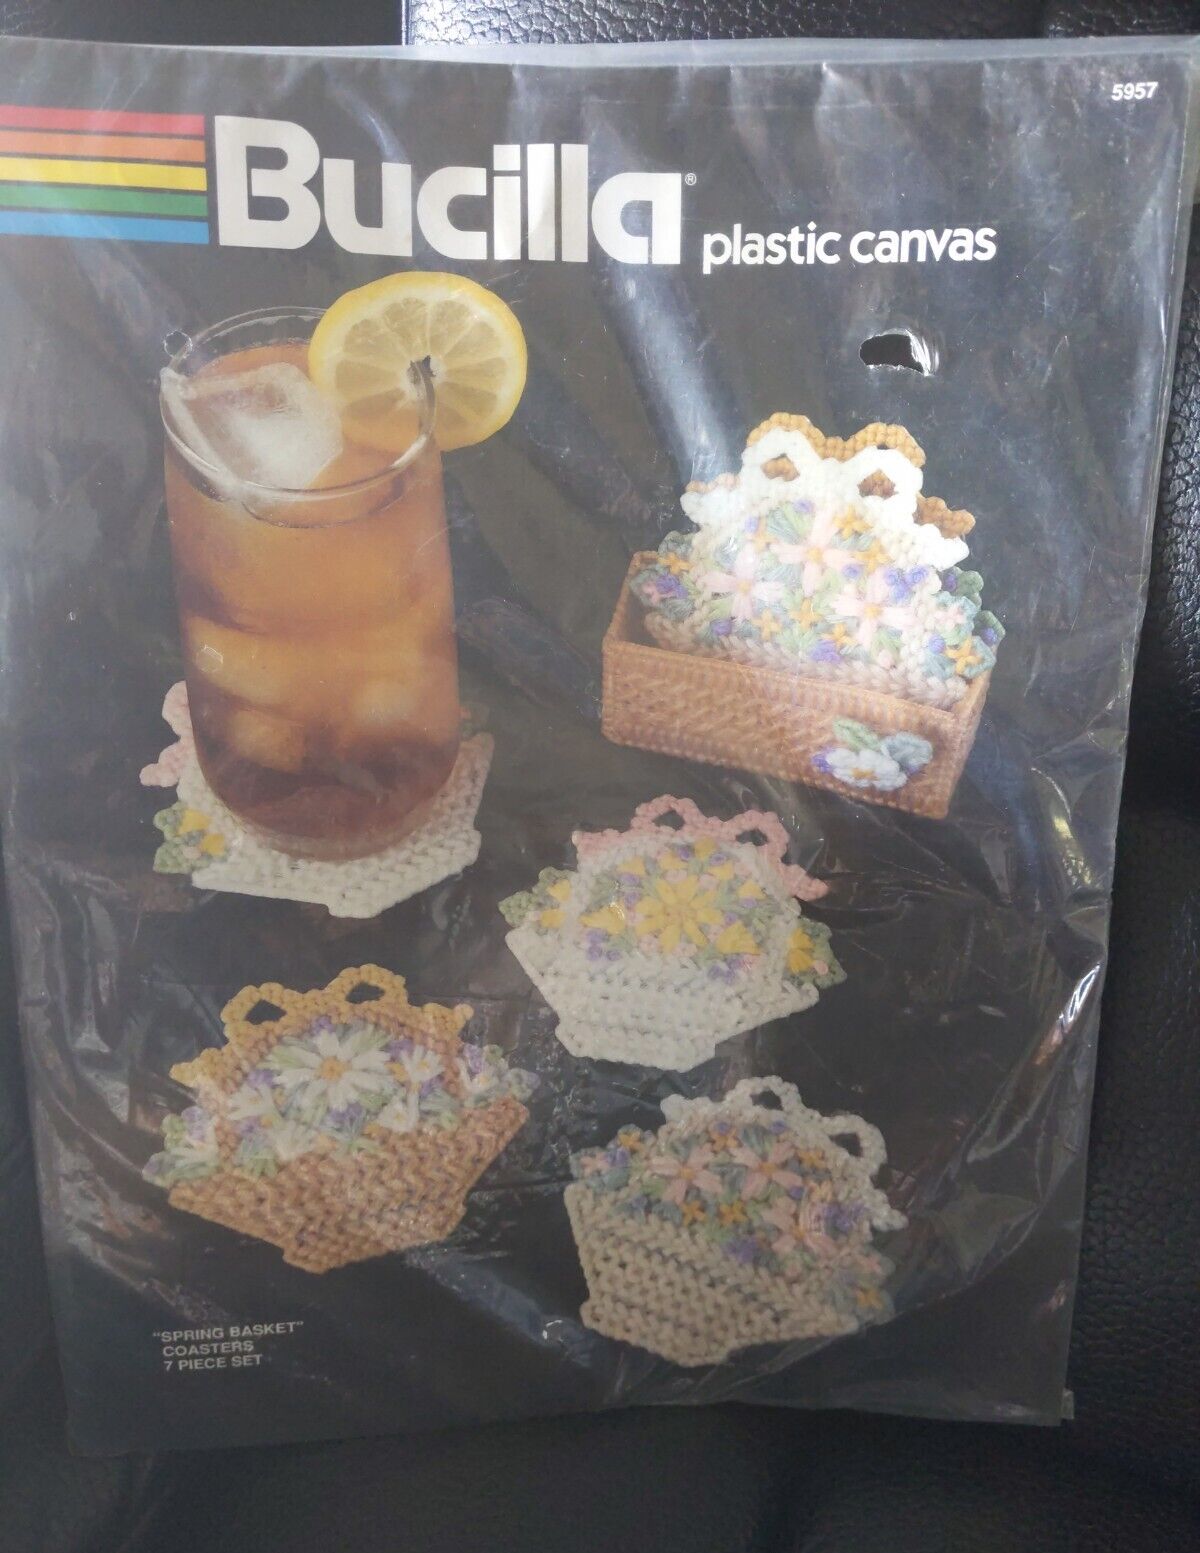 Bucilla Plastic Canvas Kit 5957 Spring Basket Coasters 7 PC Set Flowers New